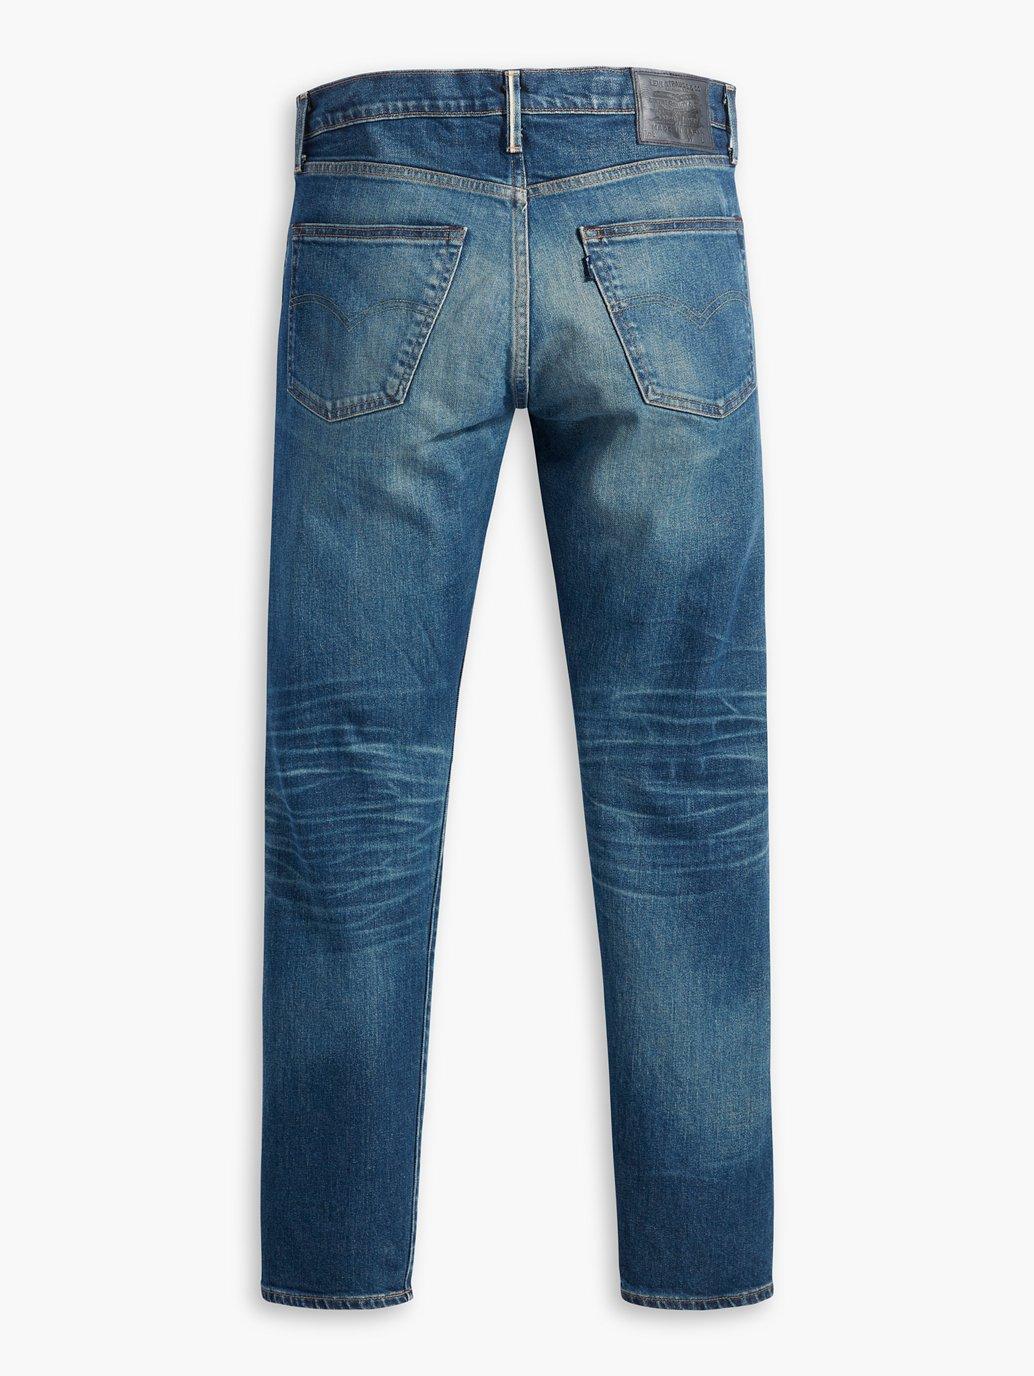 Buy Levi's® Men's 512™ Slim Taper Jeans| Levi’s Official Online Store SG